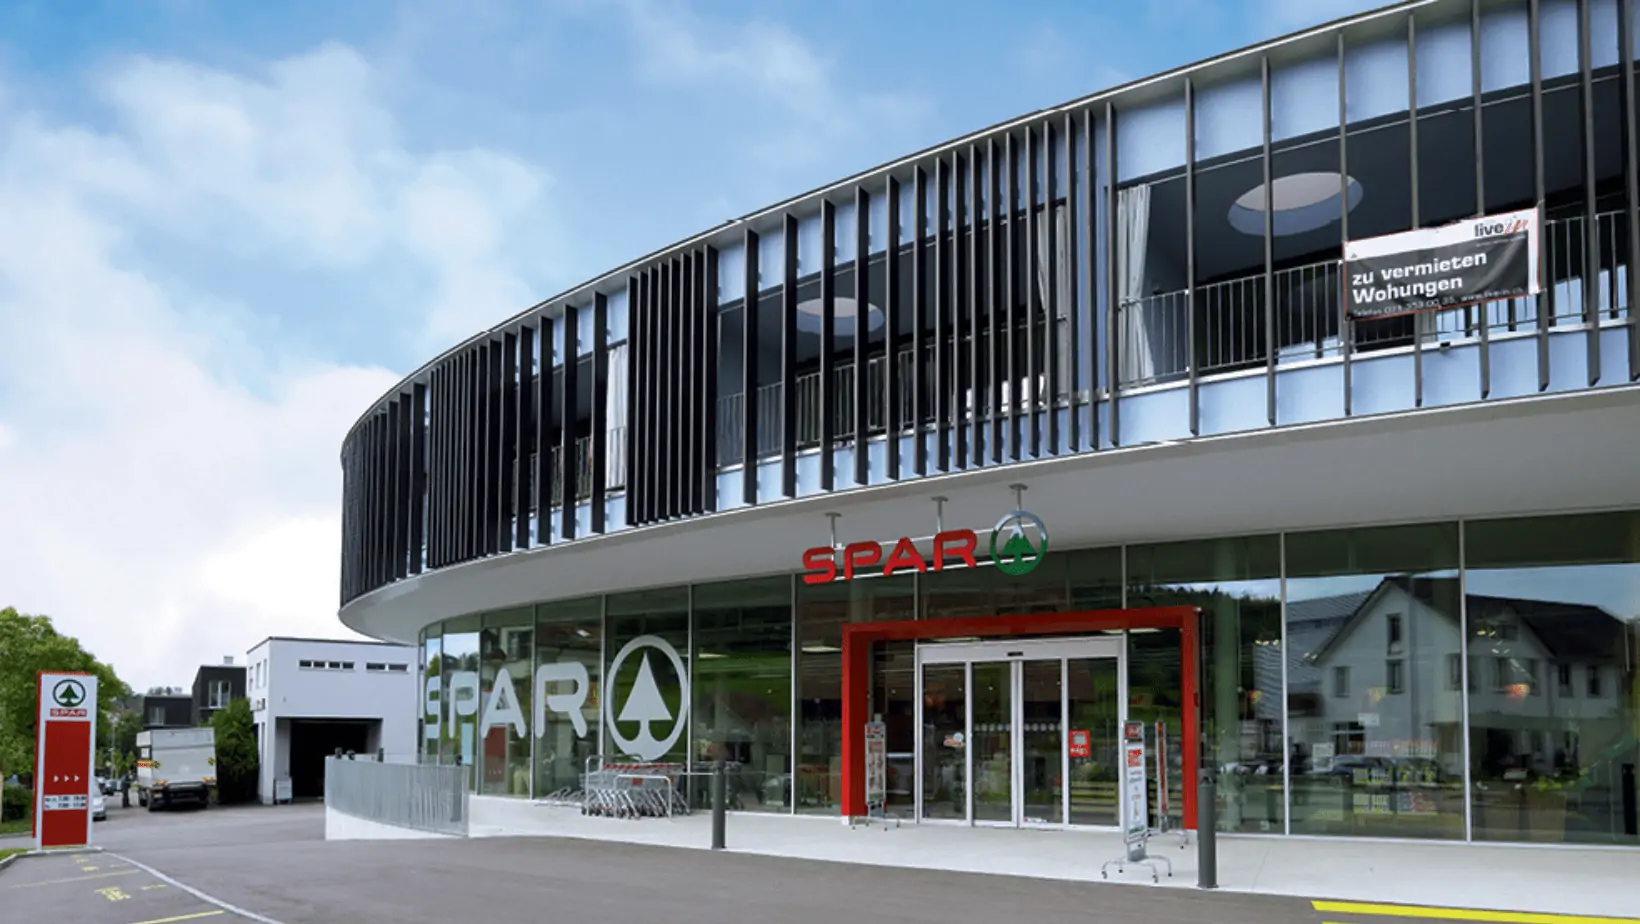 SPAR’s SAP Saga: R1.6B Shock, 47.7% Dive, and Strategic Bounceback – Inside the Retail Rollercoaster